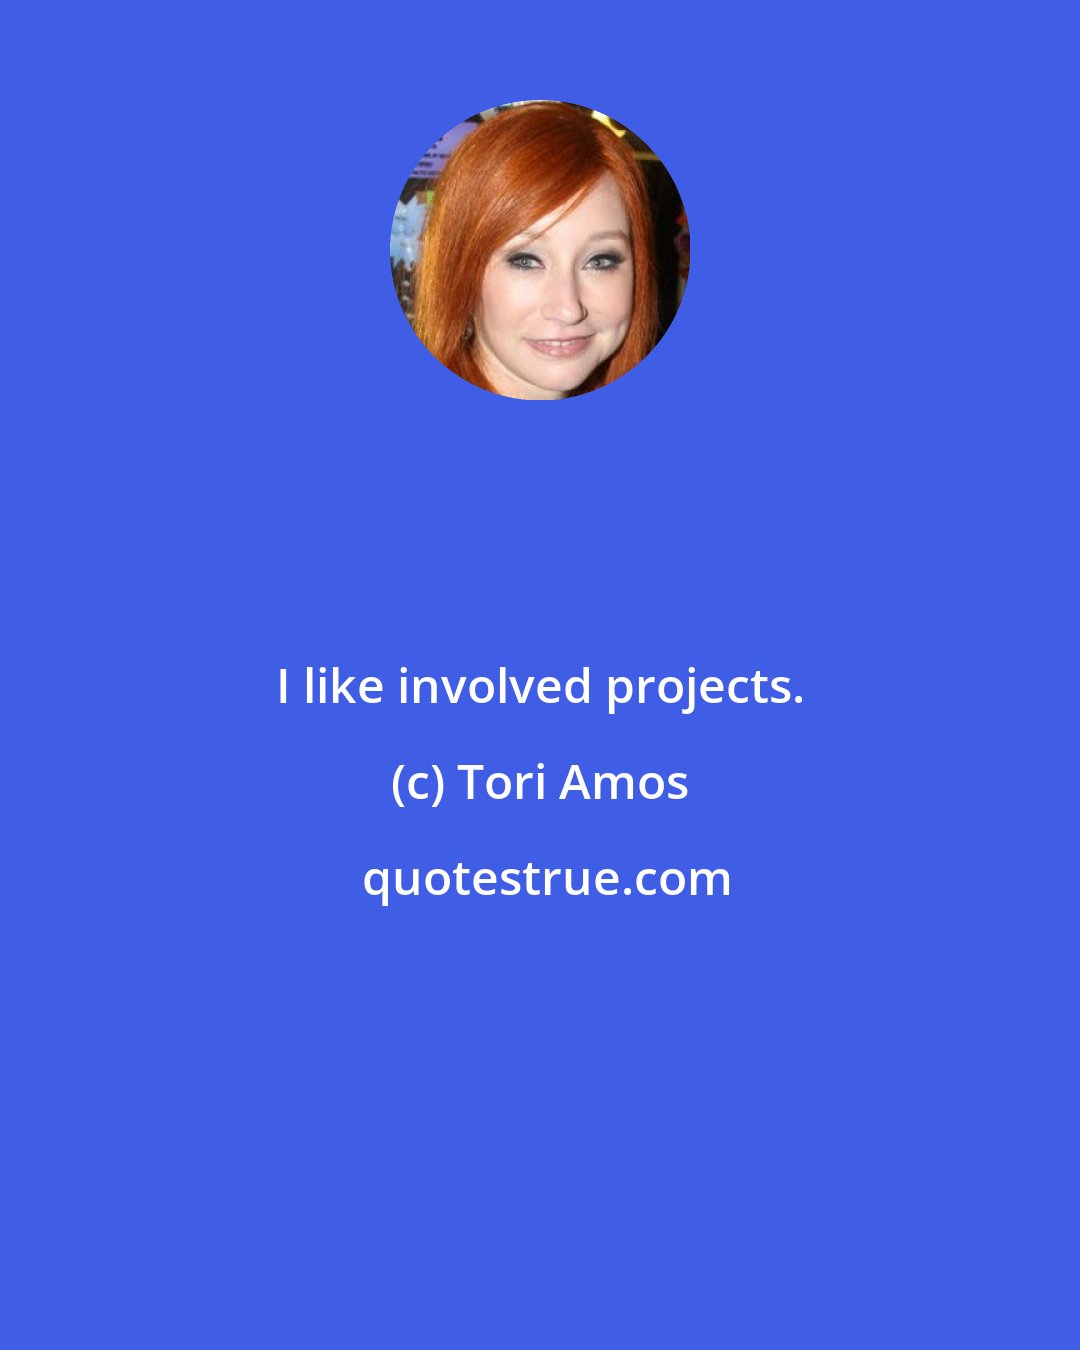 Tori Amos: I like involved projects.